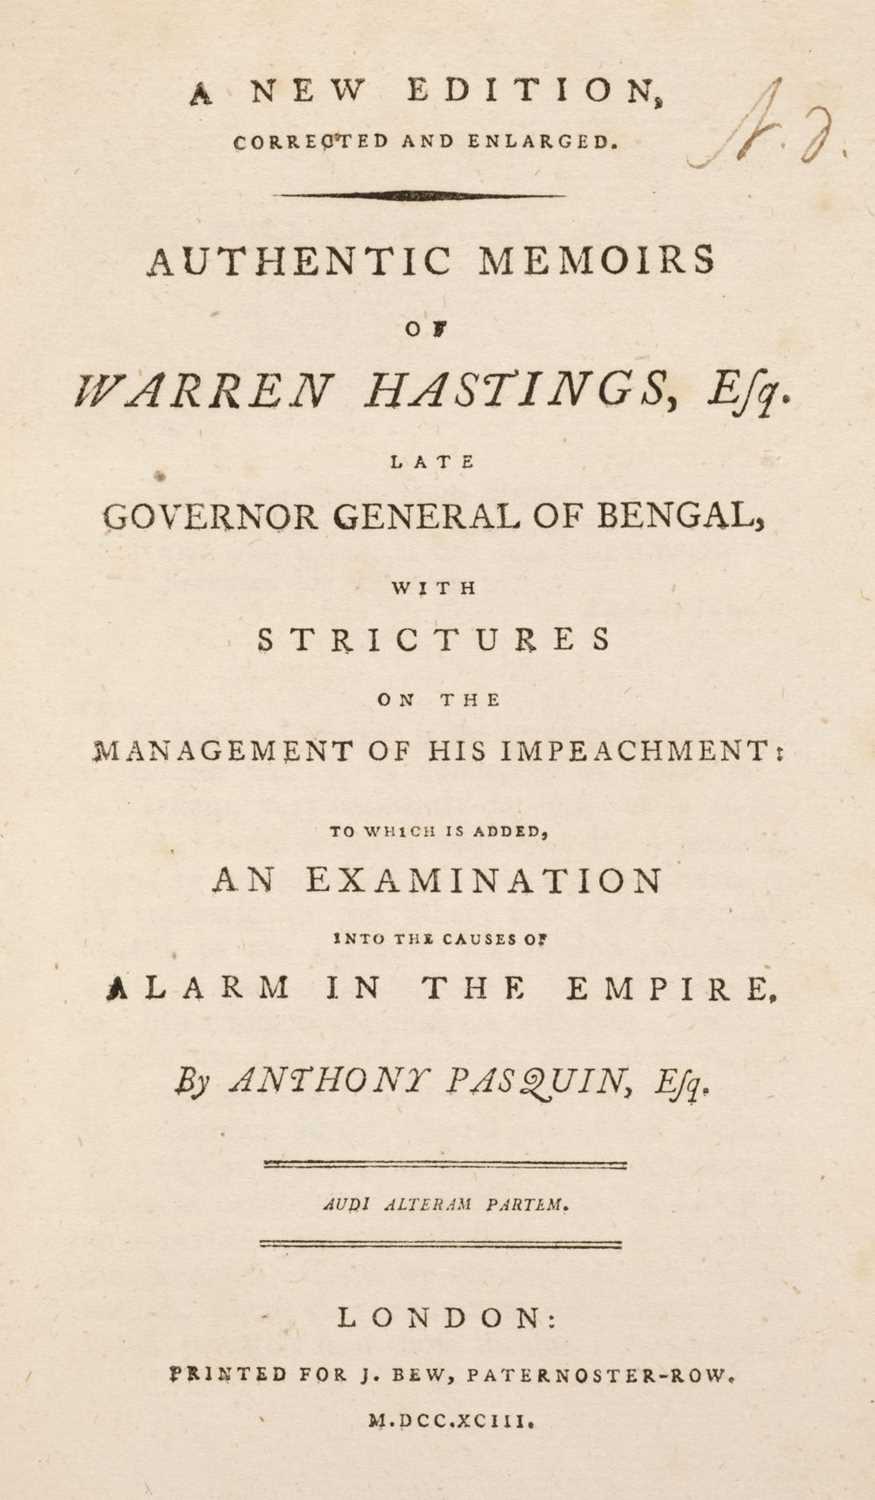 Lot 30 - Pasquin (Anthony). Authentic Memoirs of Warren Hastings, London: J. Bew, 1793